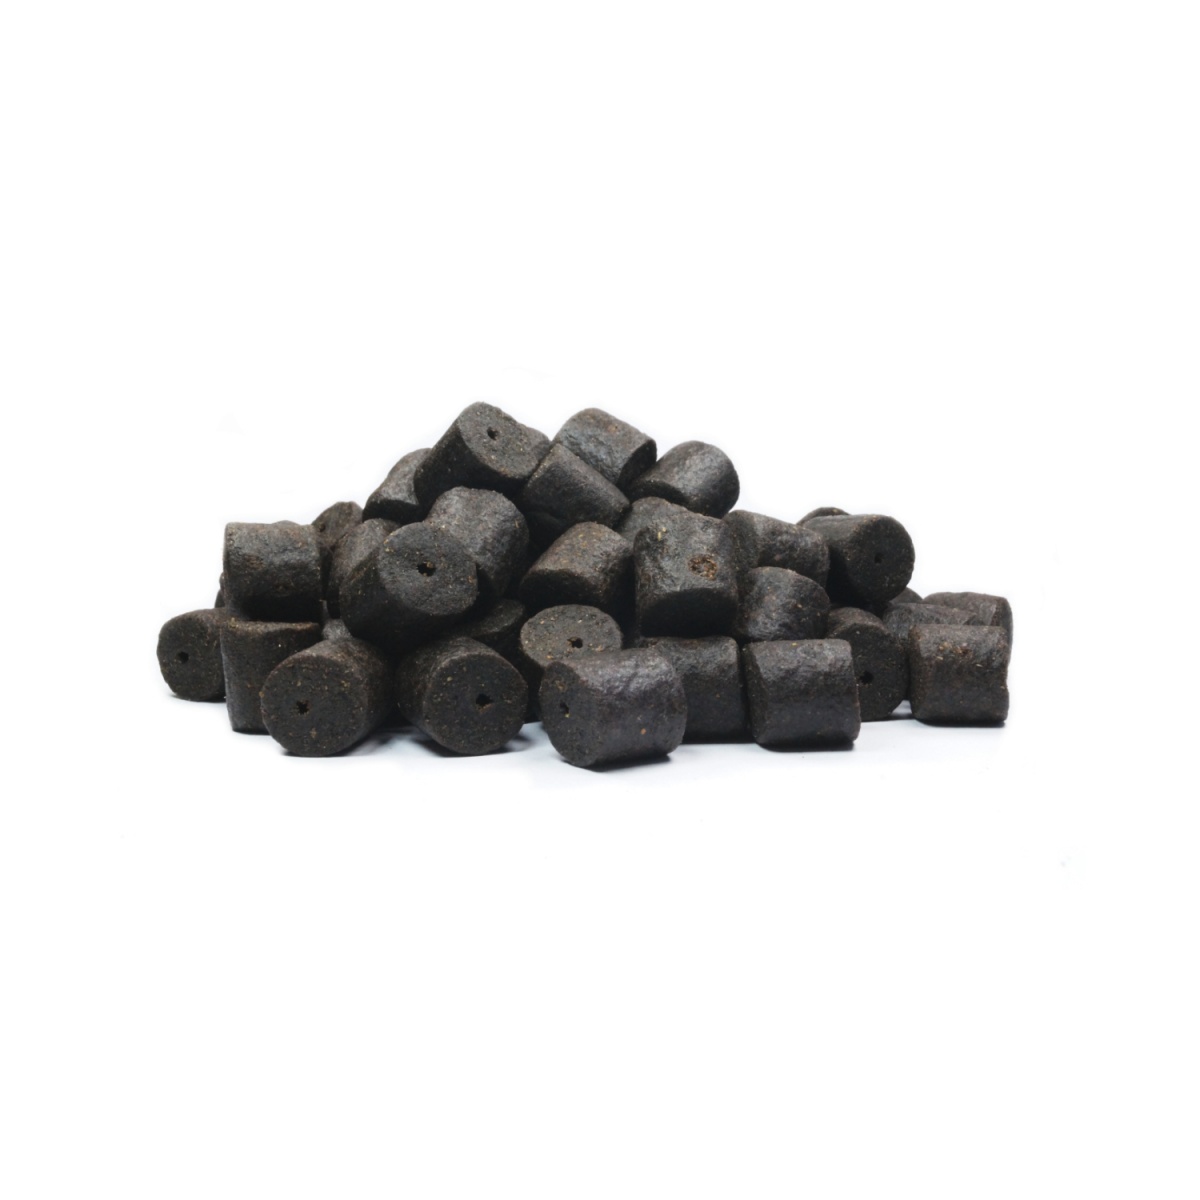 ROCKWORLD Super Black Halibut Pellets - Pelet Karpiowy 15mm / 1kg rozmiar / opakowanie